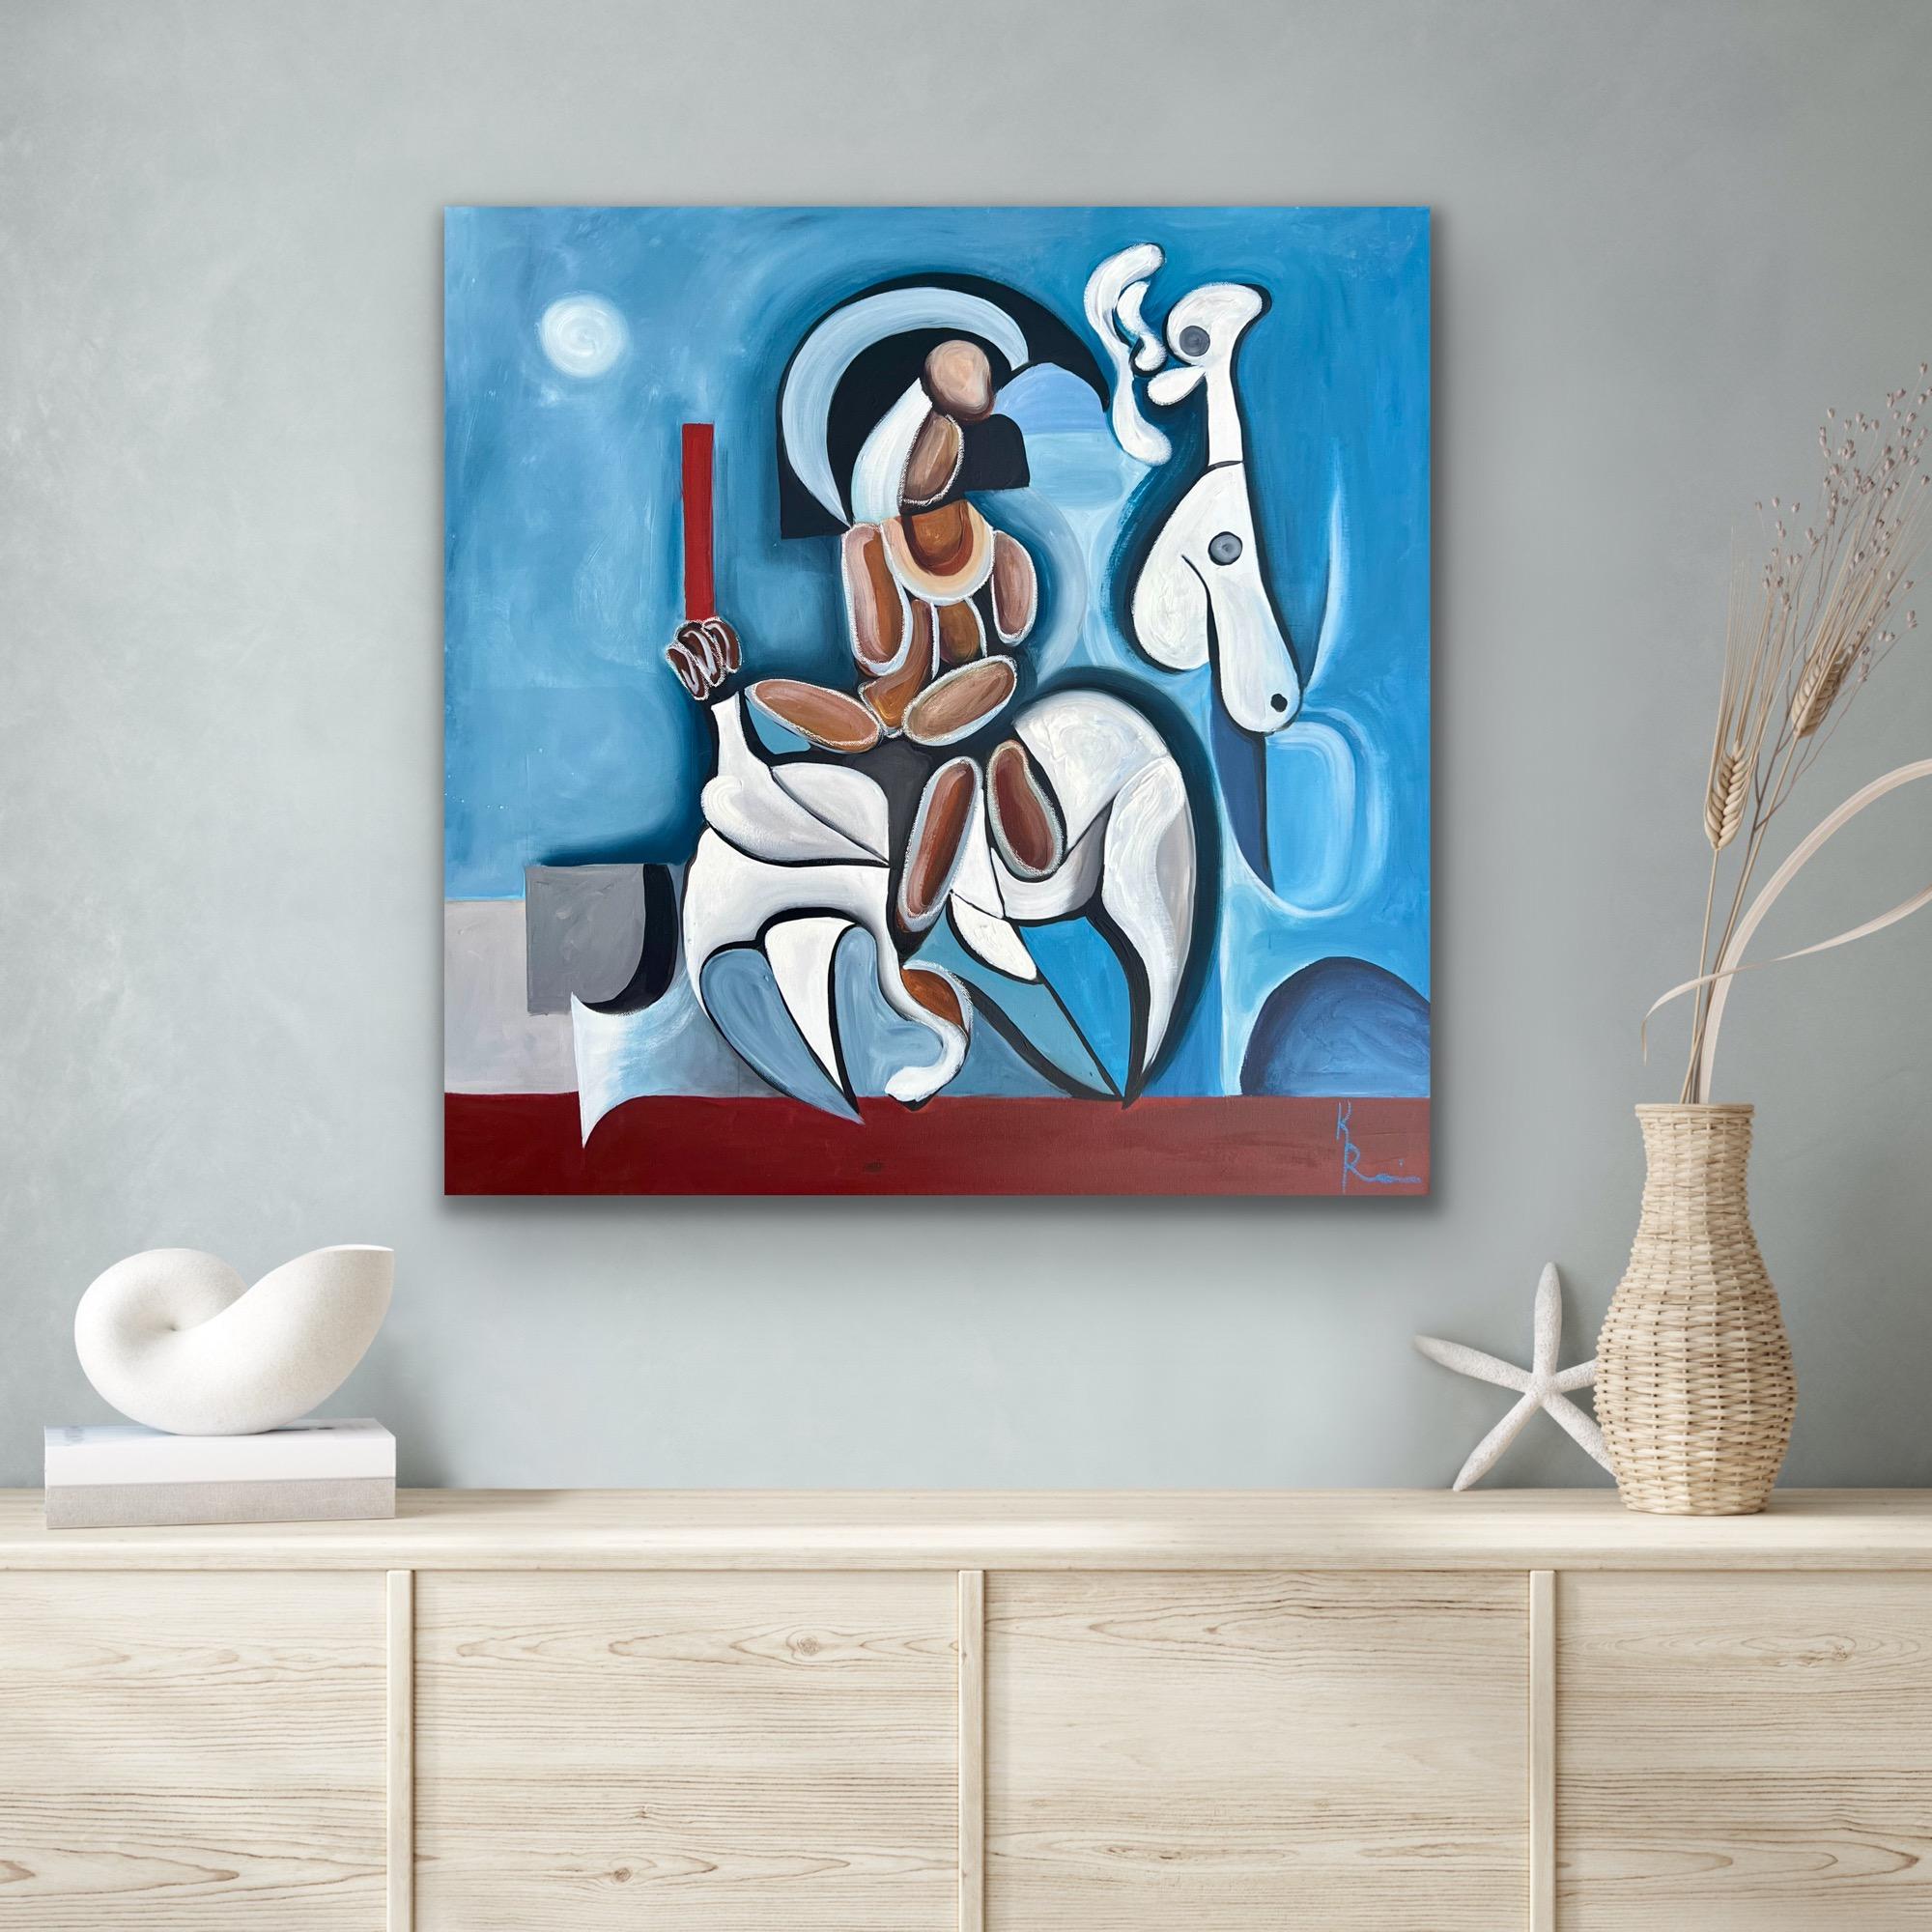 Riding a horse  - Contemporary Painting by Kseniya Rai